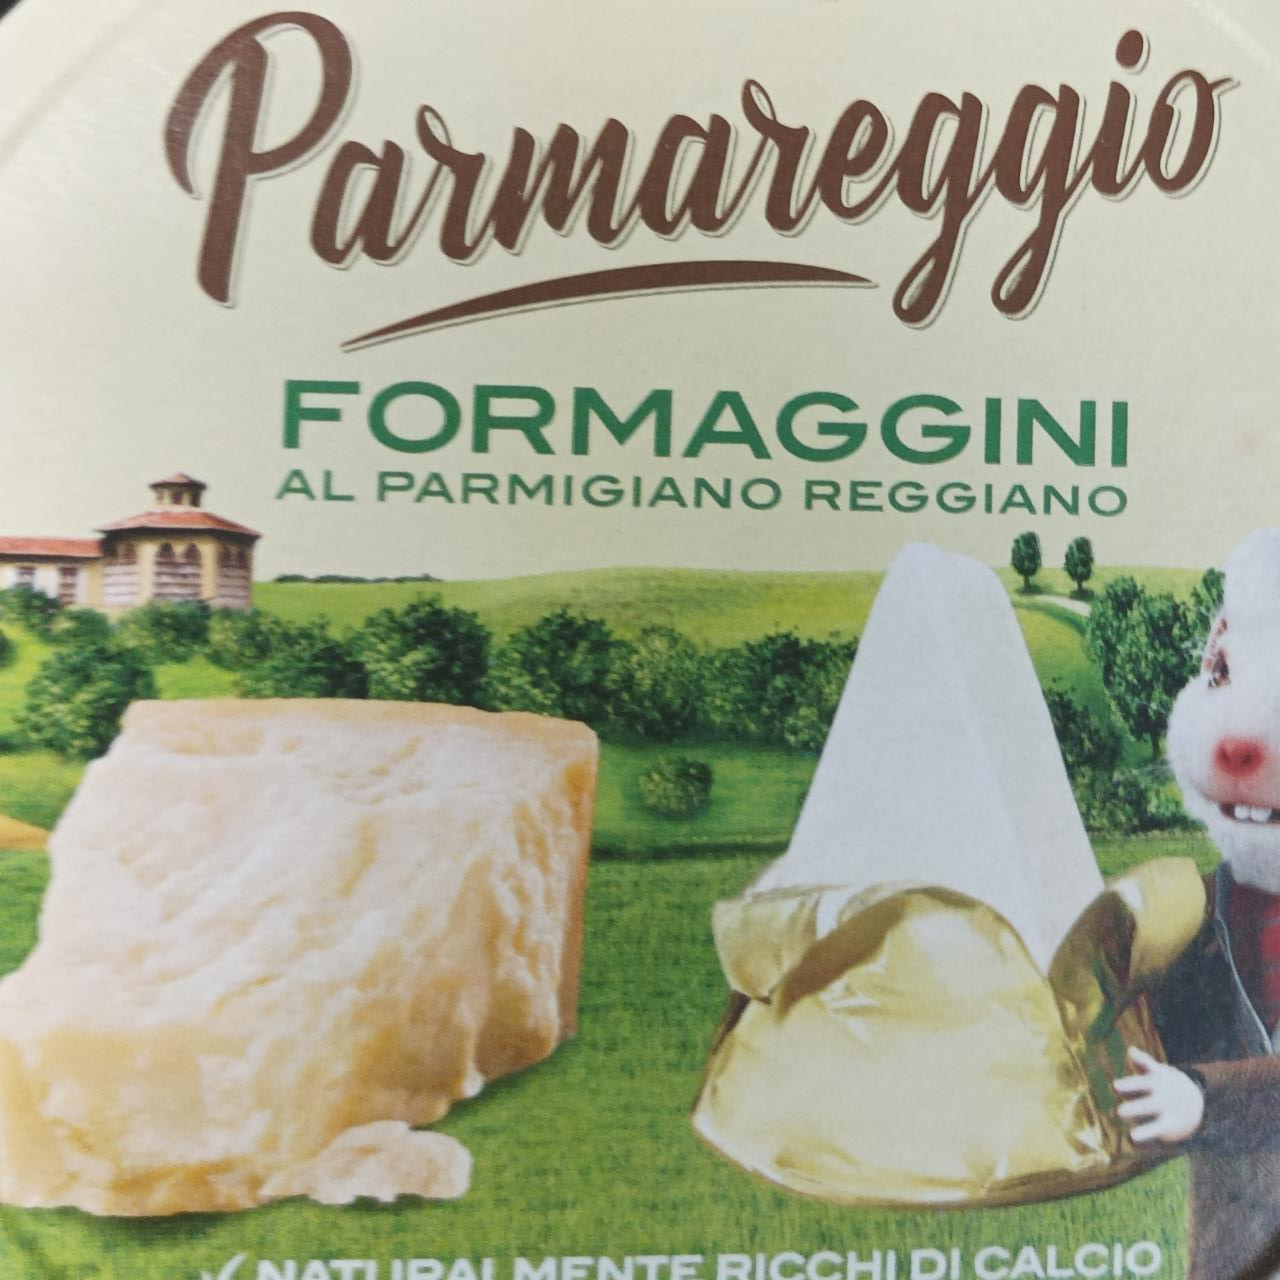 Fotografie - formaggini al Parmigiano Reggiano Parmareggio